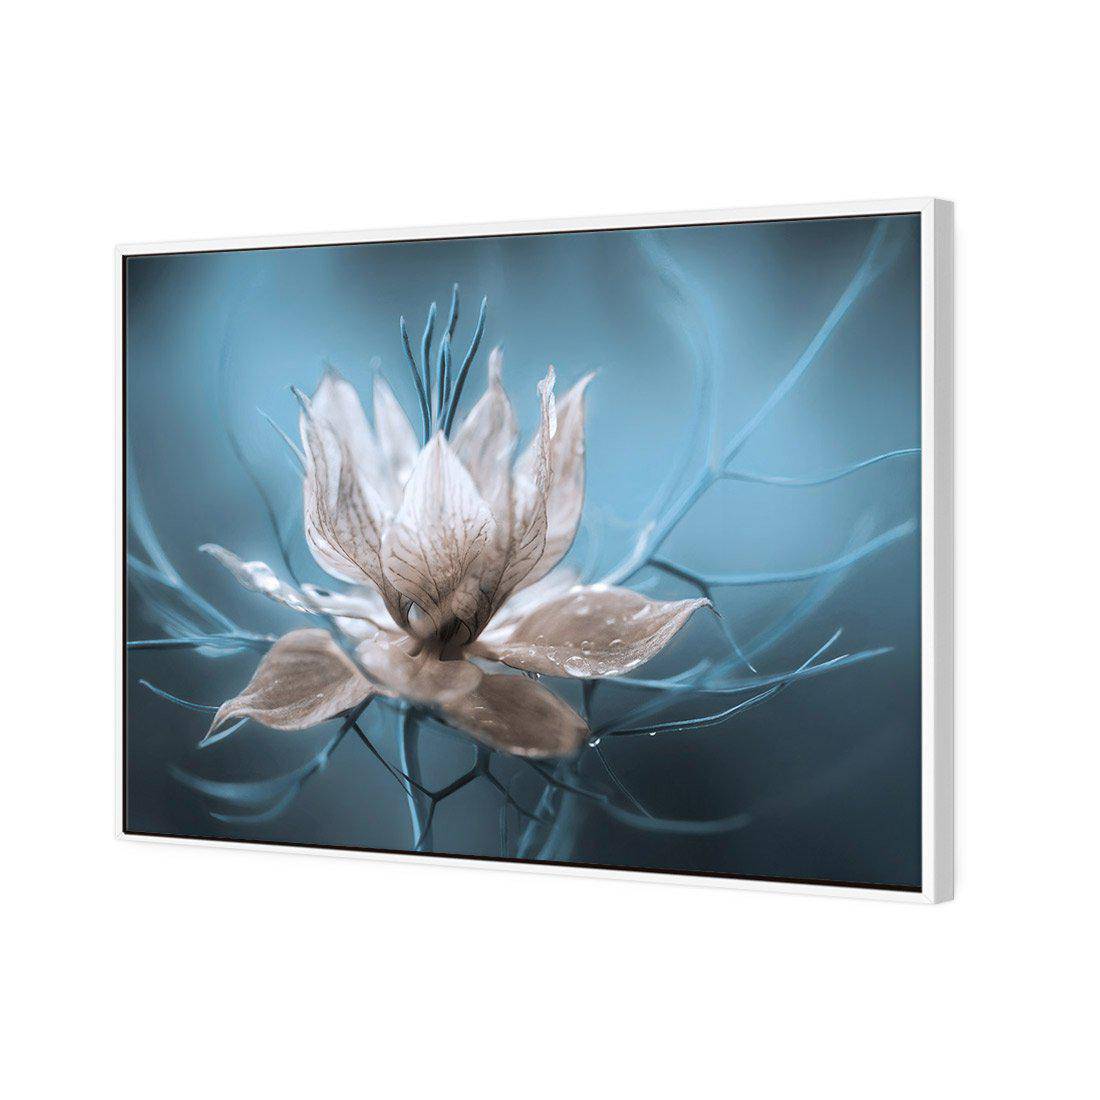 Nigella by Mandy Disher Canvas Art-Canvas-Wall Art Designs-45x30cm-Canvas - White Frame-Wall Art Designs